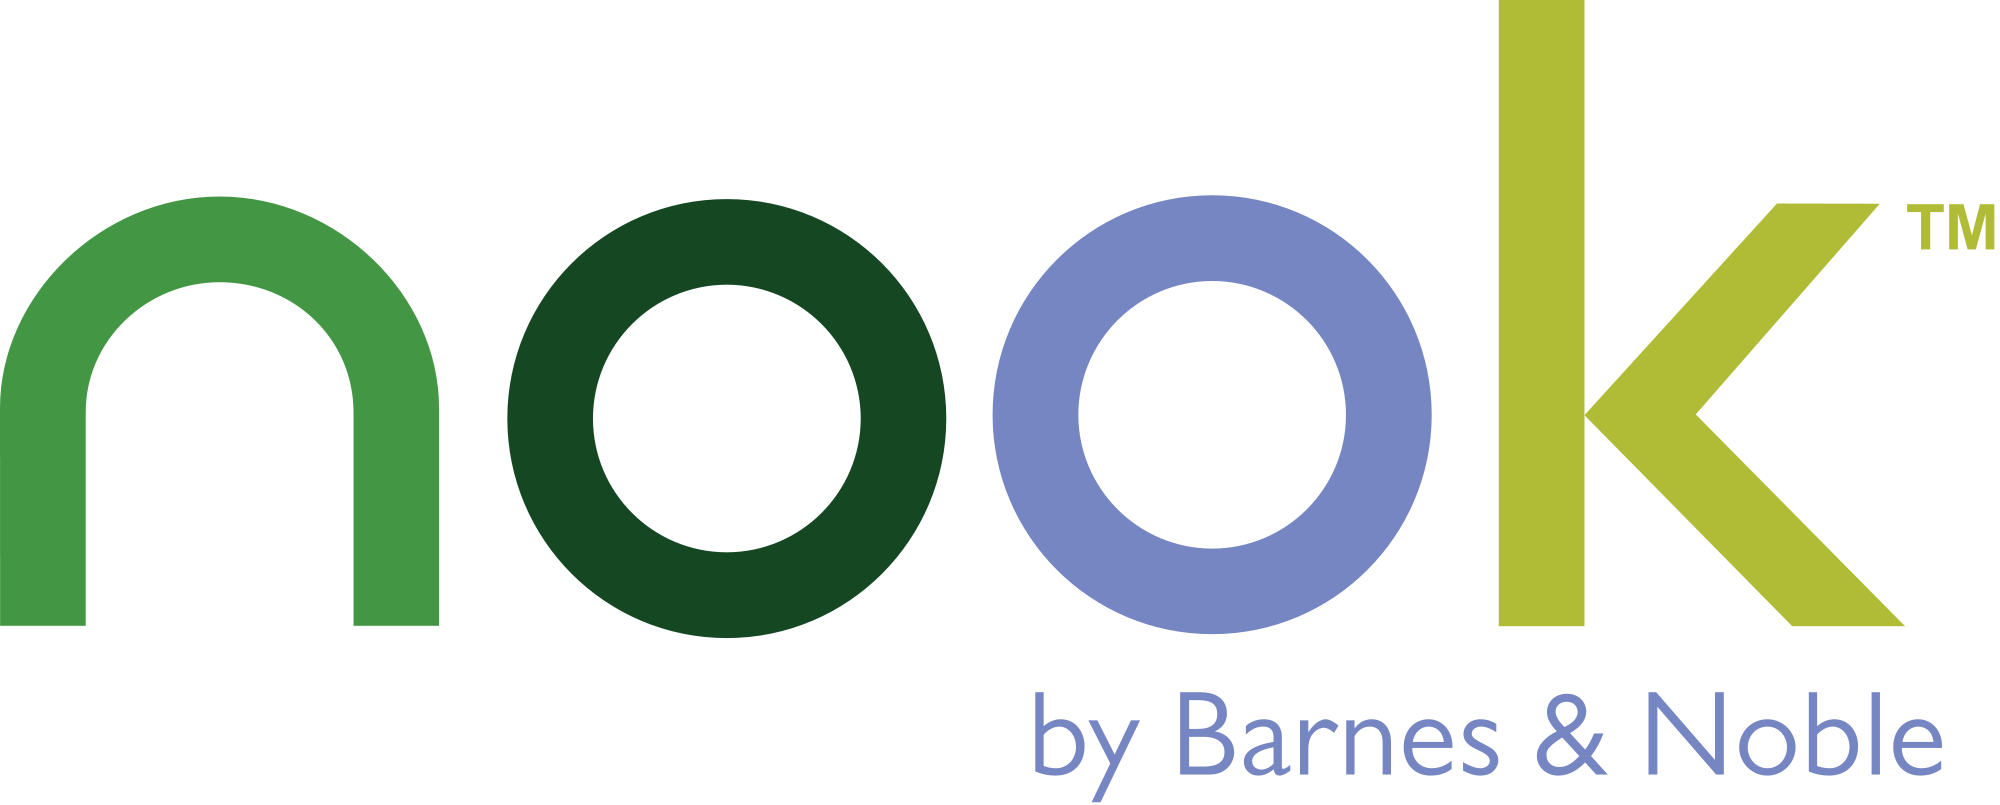 Nook-Logo